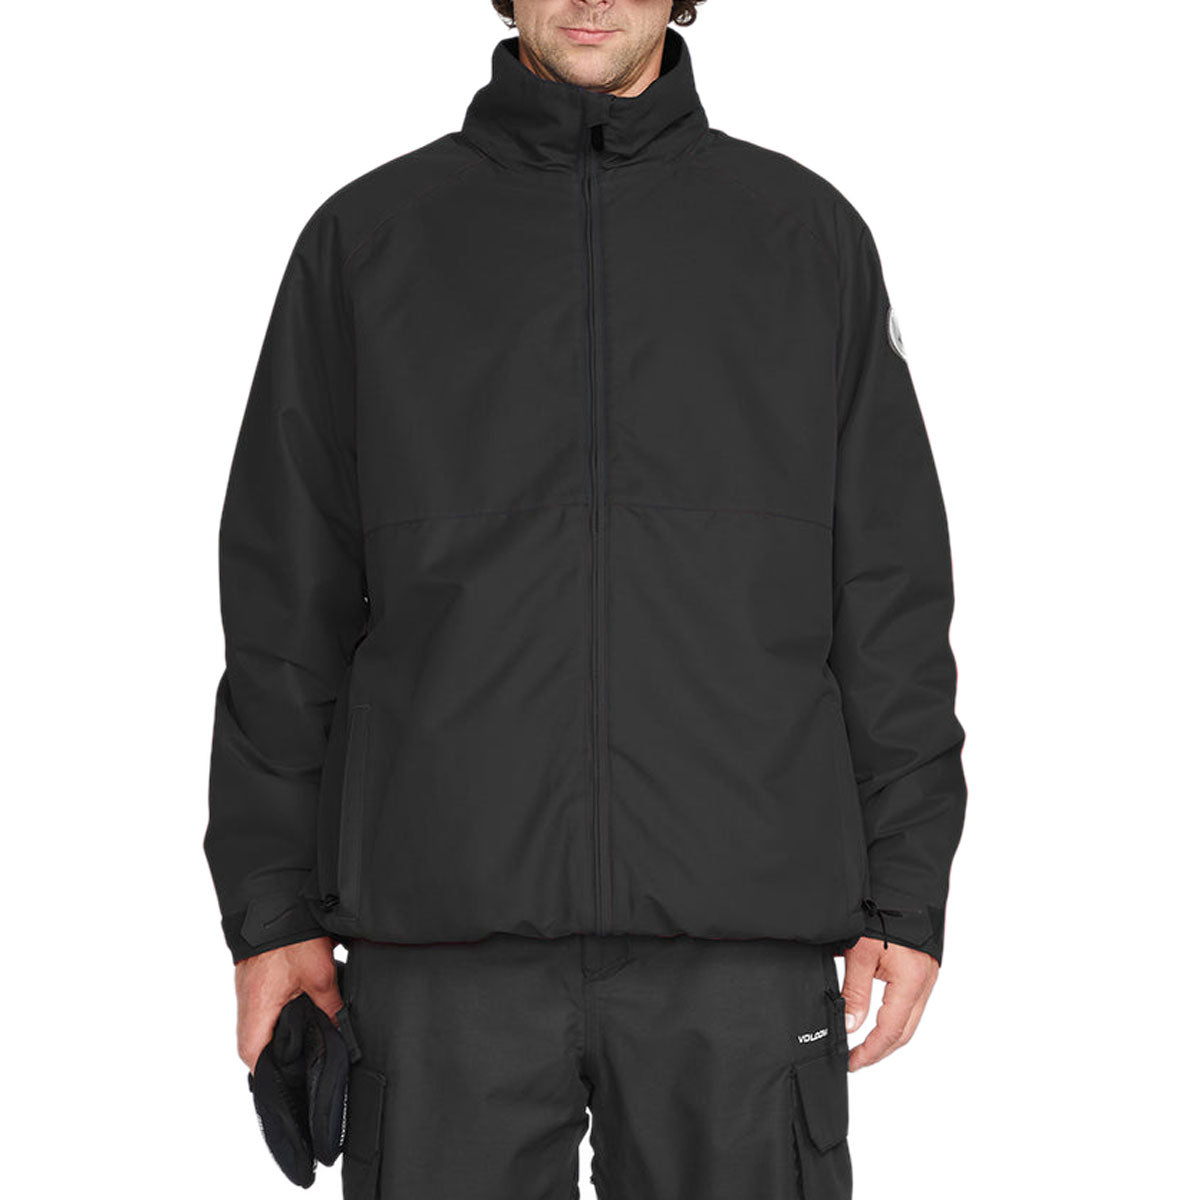 Volcom 2836 Insulated Snowboard Jacket - Black image 1